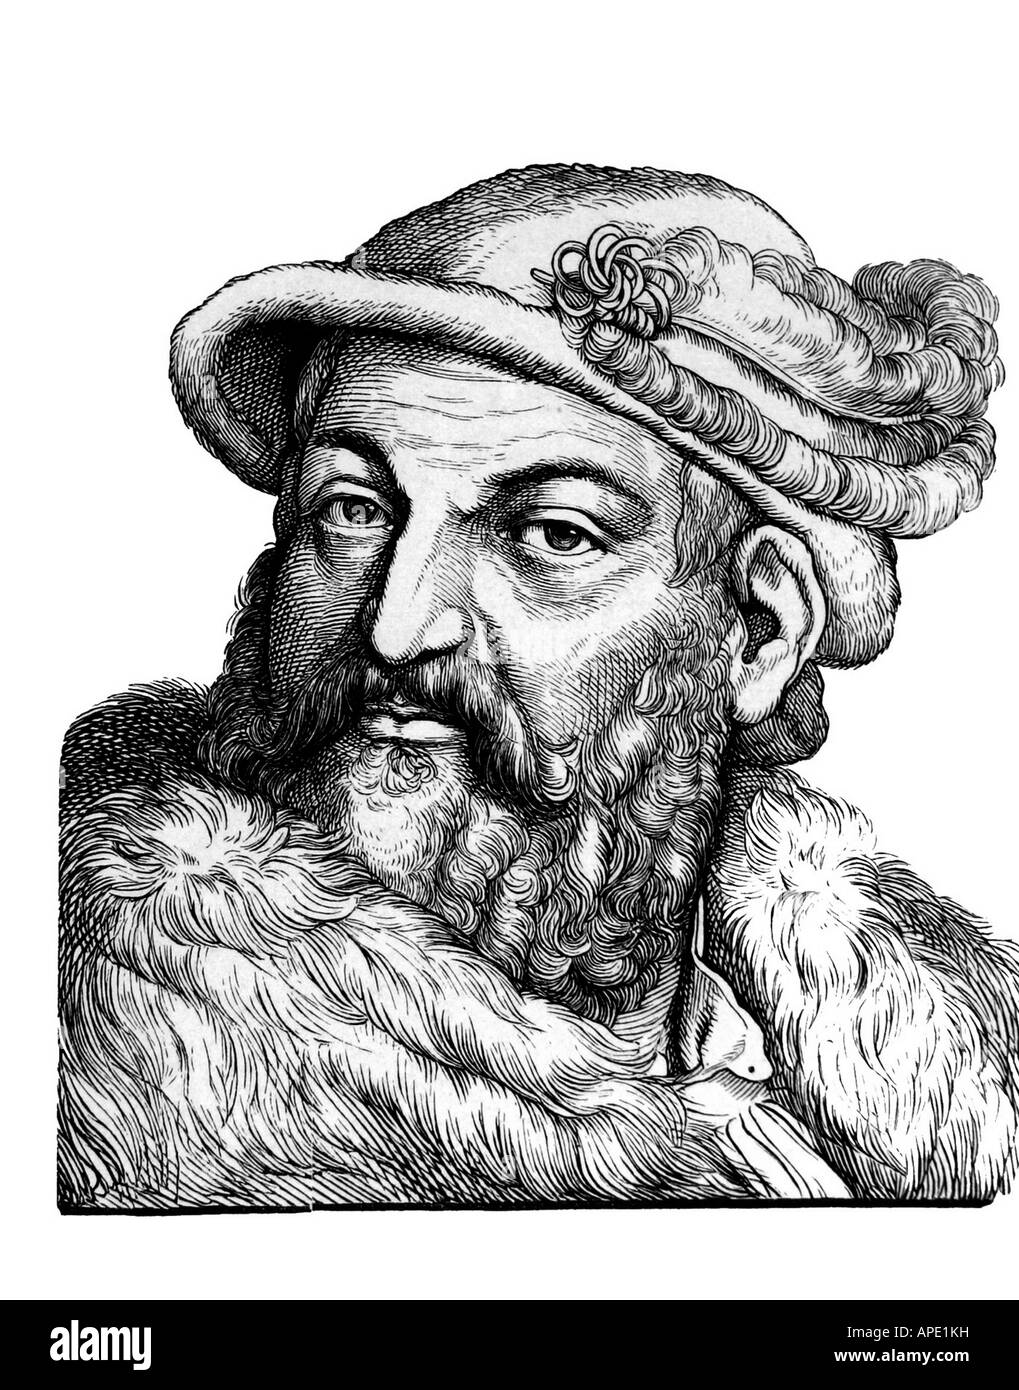 Joachim II Hector, 9.1.1505 - 3.1.1571, Elector of Brandenburg 1535 - 1571, portrait, steel wood engraving, 19th century, , Stock Photo